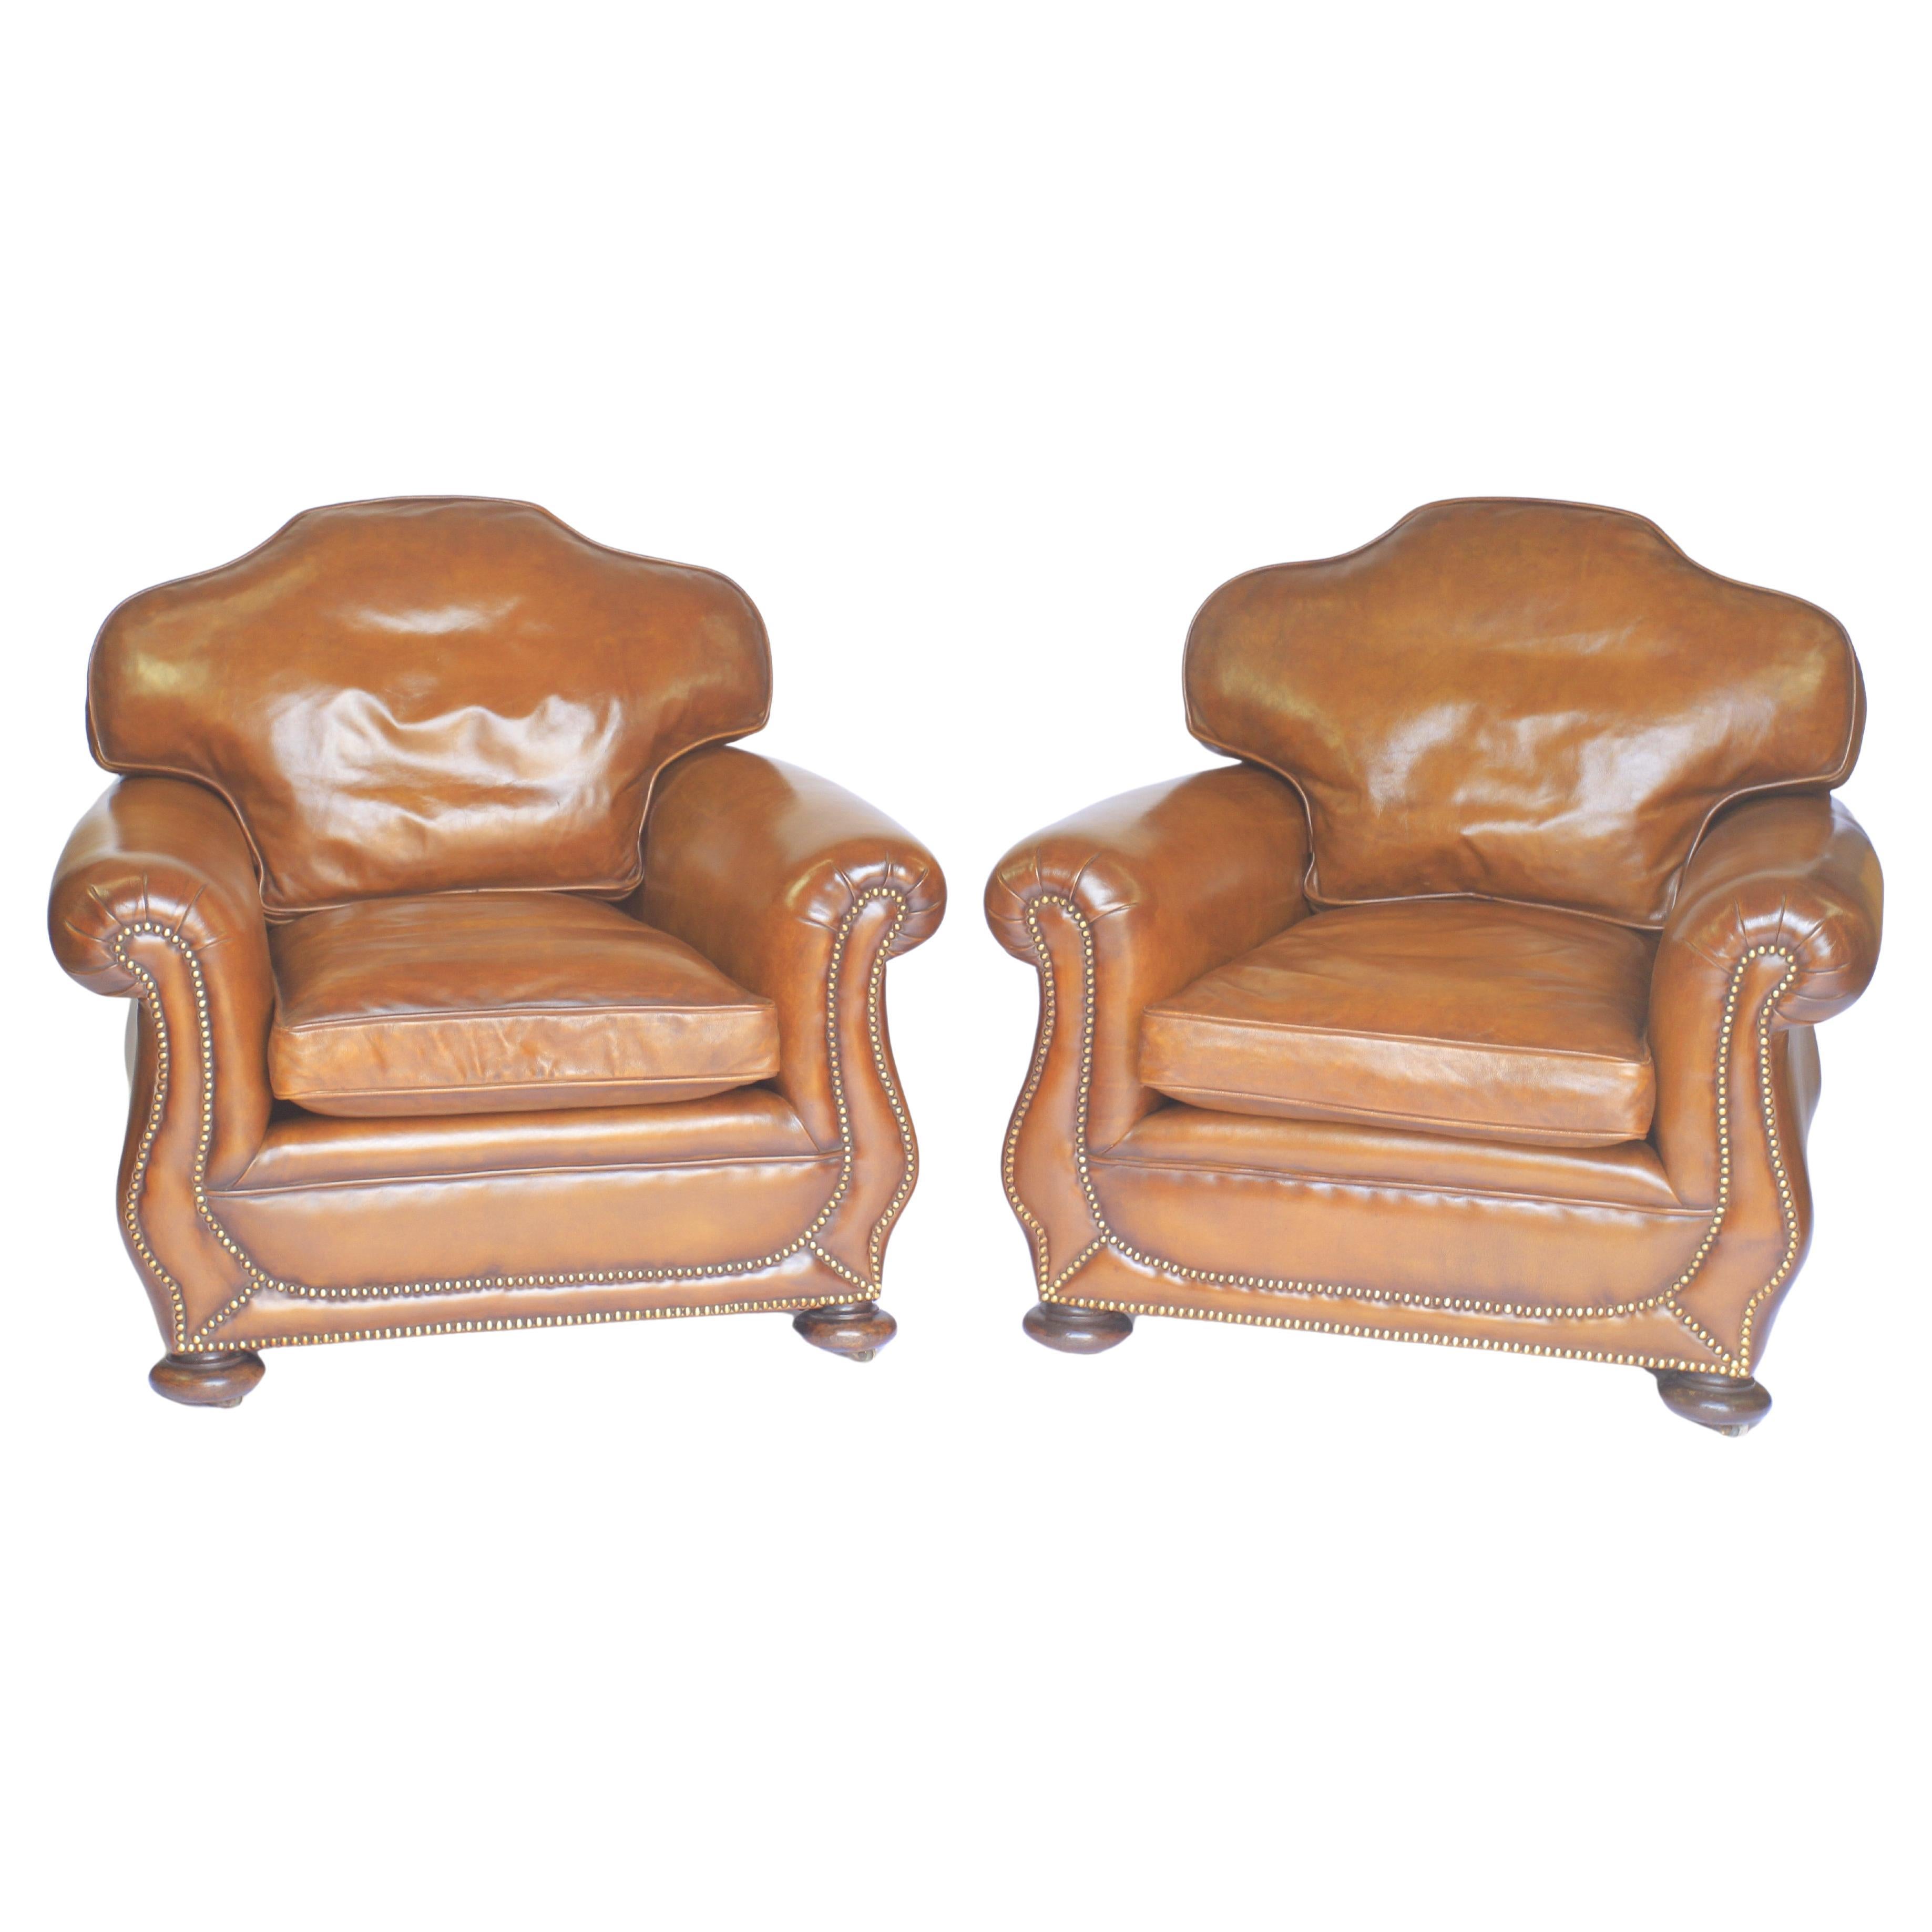 Pair Leather club chairs circa 1920s